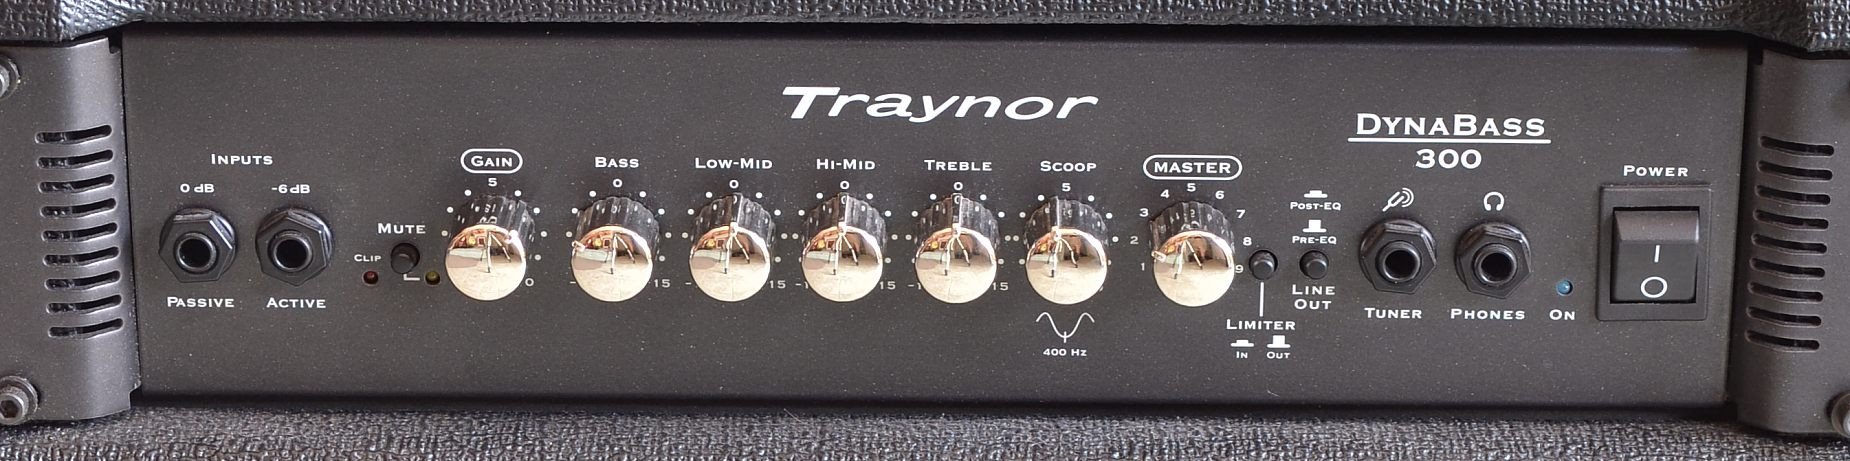 Db 300 form Traynor Db300 Bass Amp